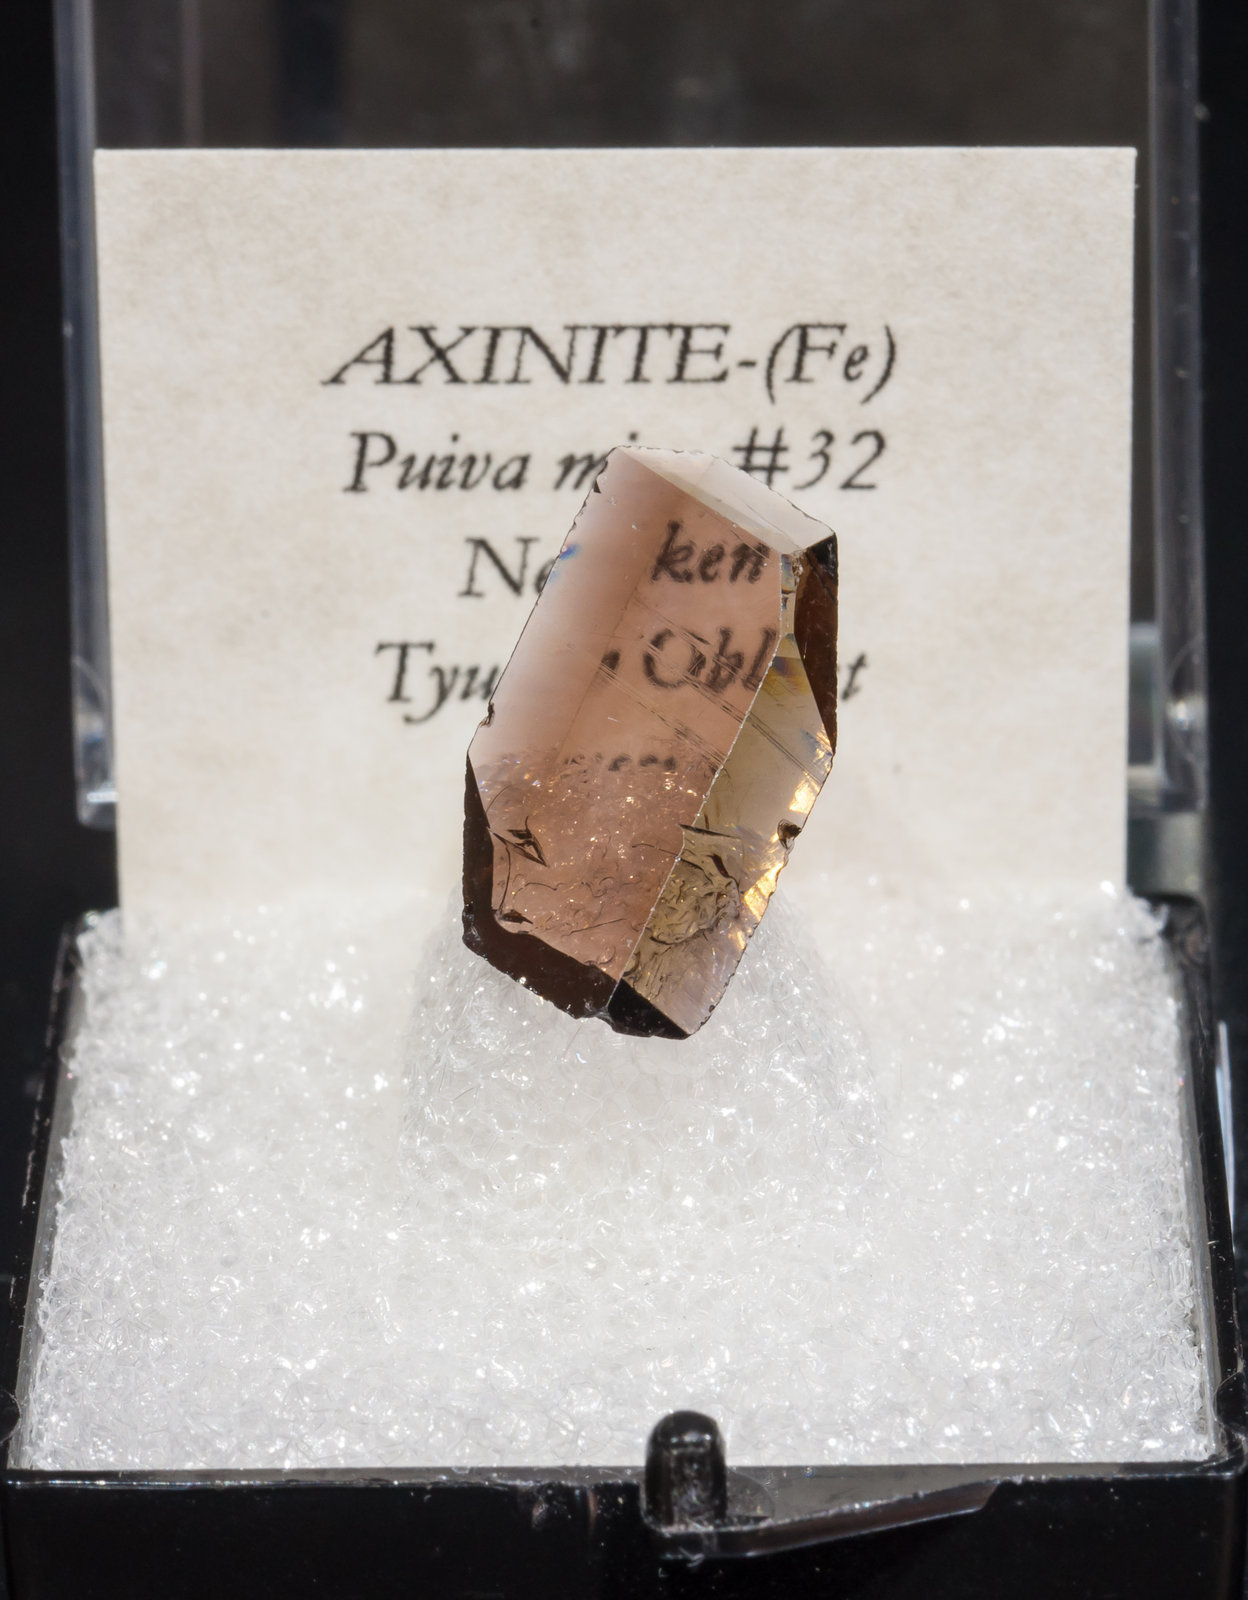 specimens/s_imagesAH5/Axinite_Fe-TE29AH5f.jpg